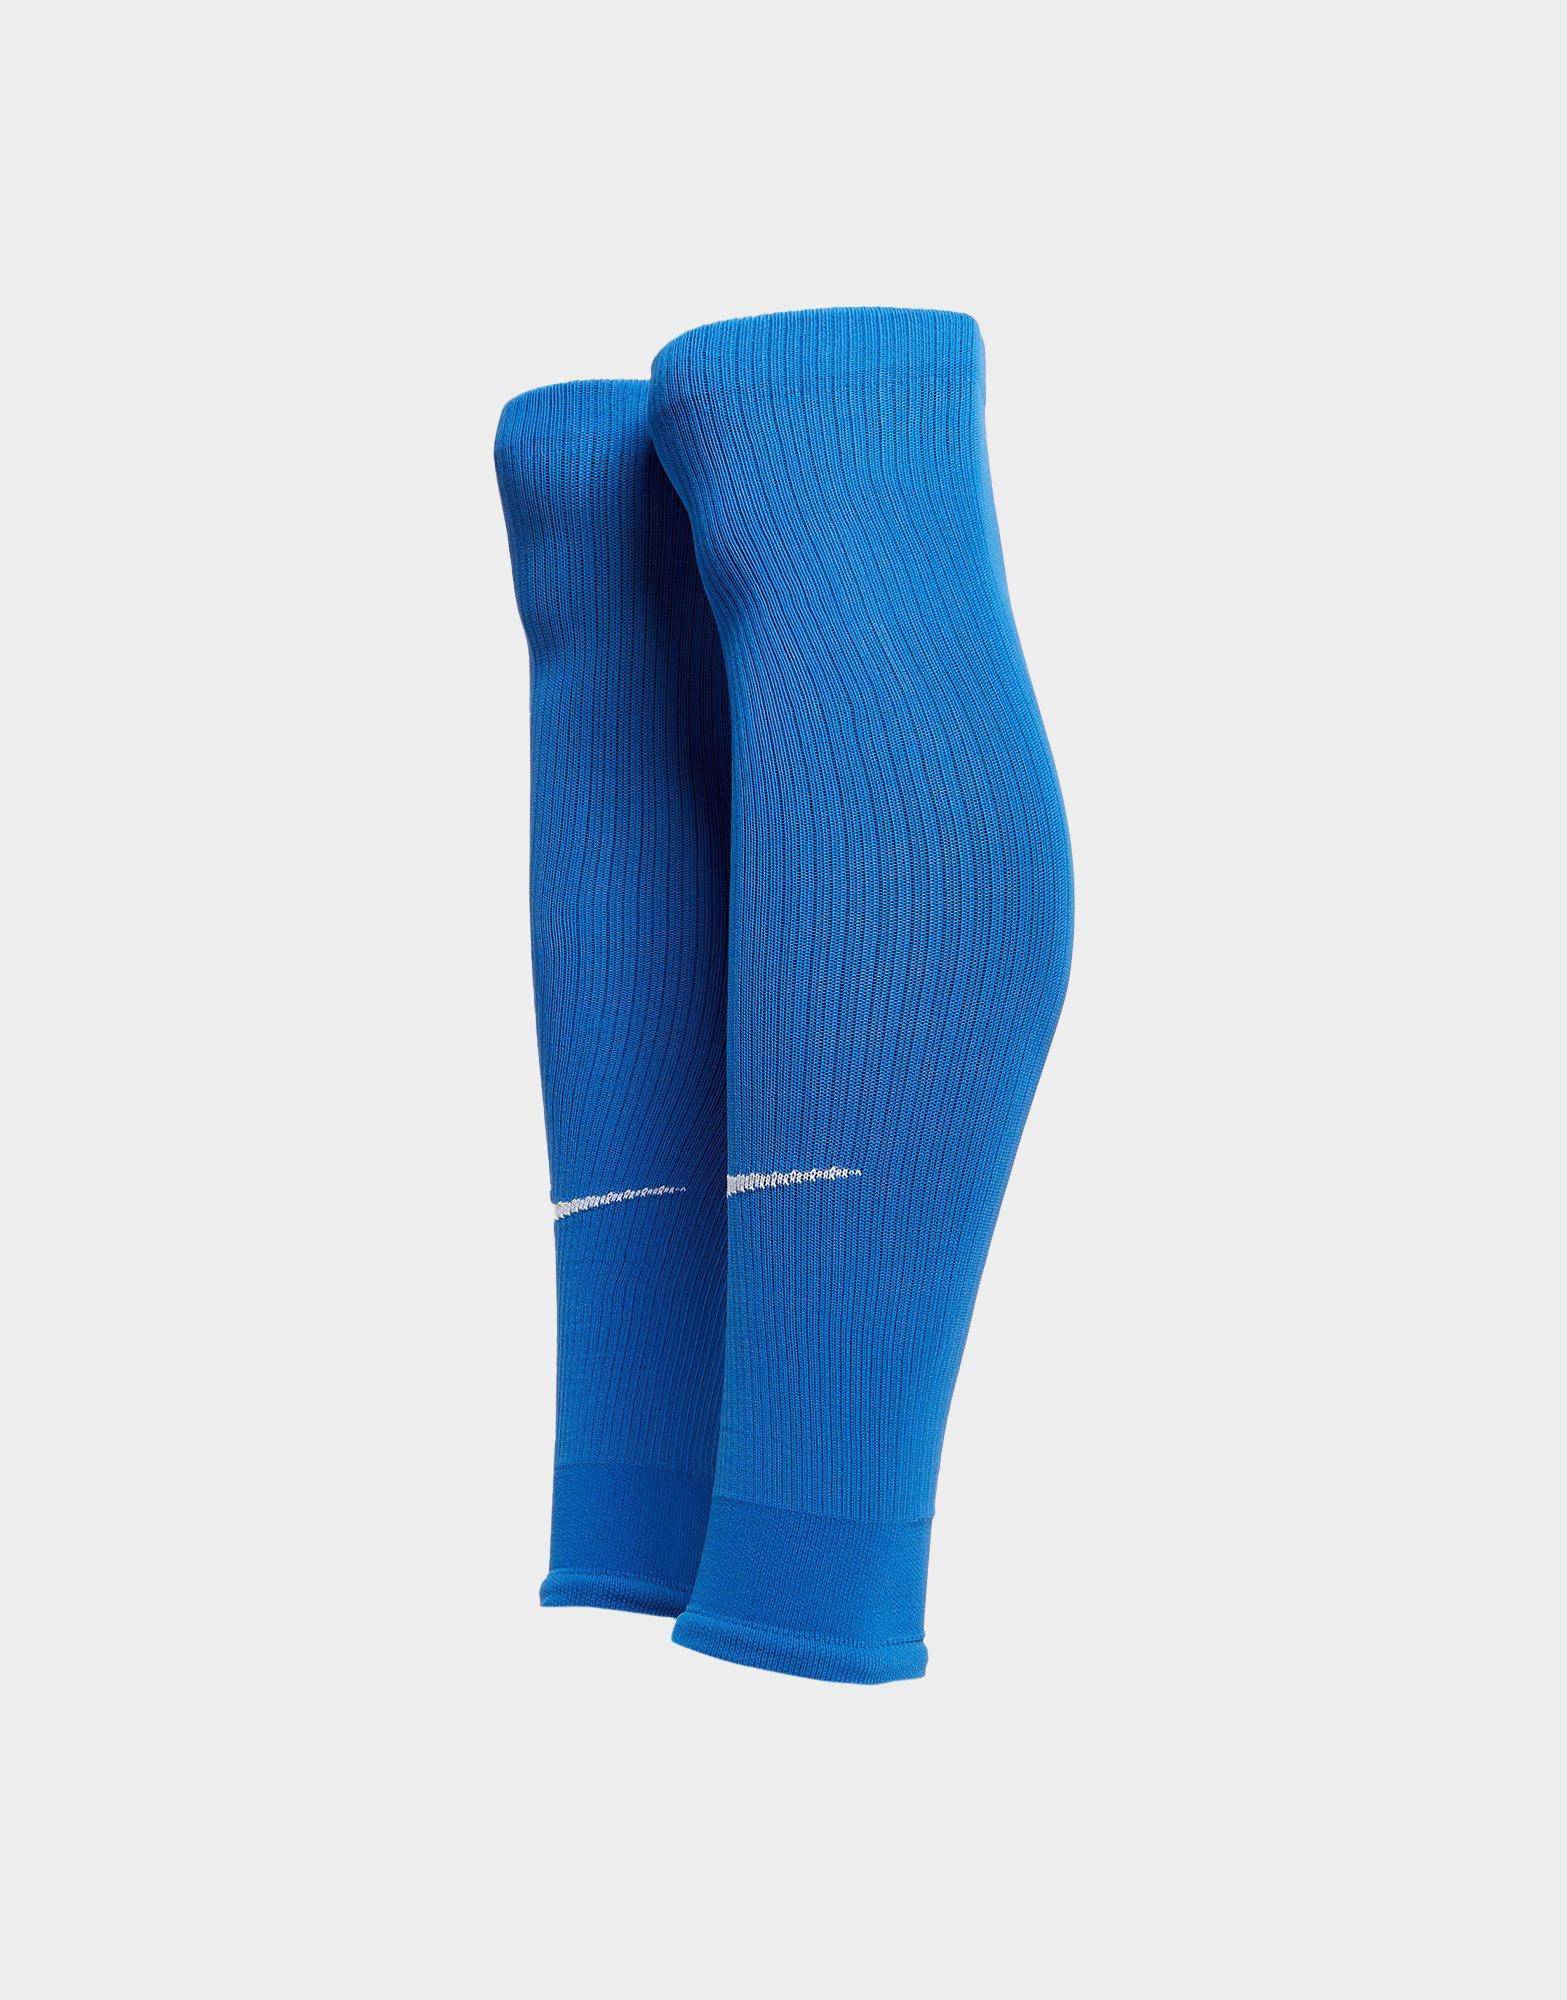 Nike Squad Leg Sleeve-S/M-Blue